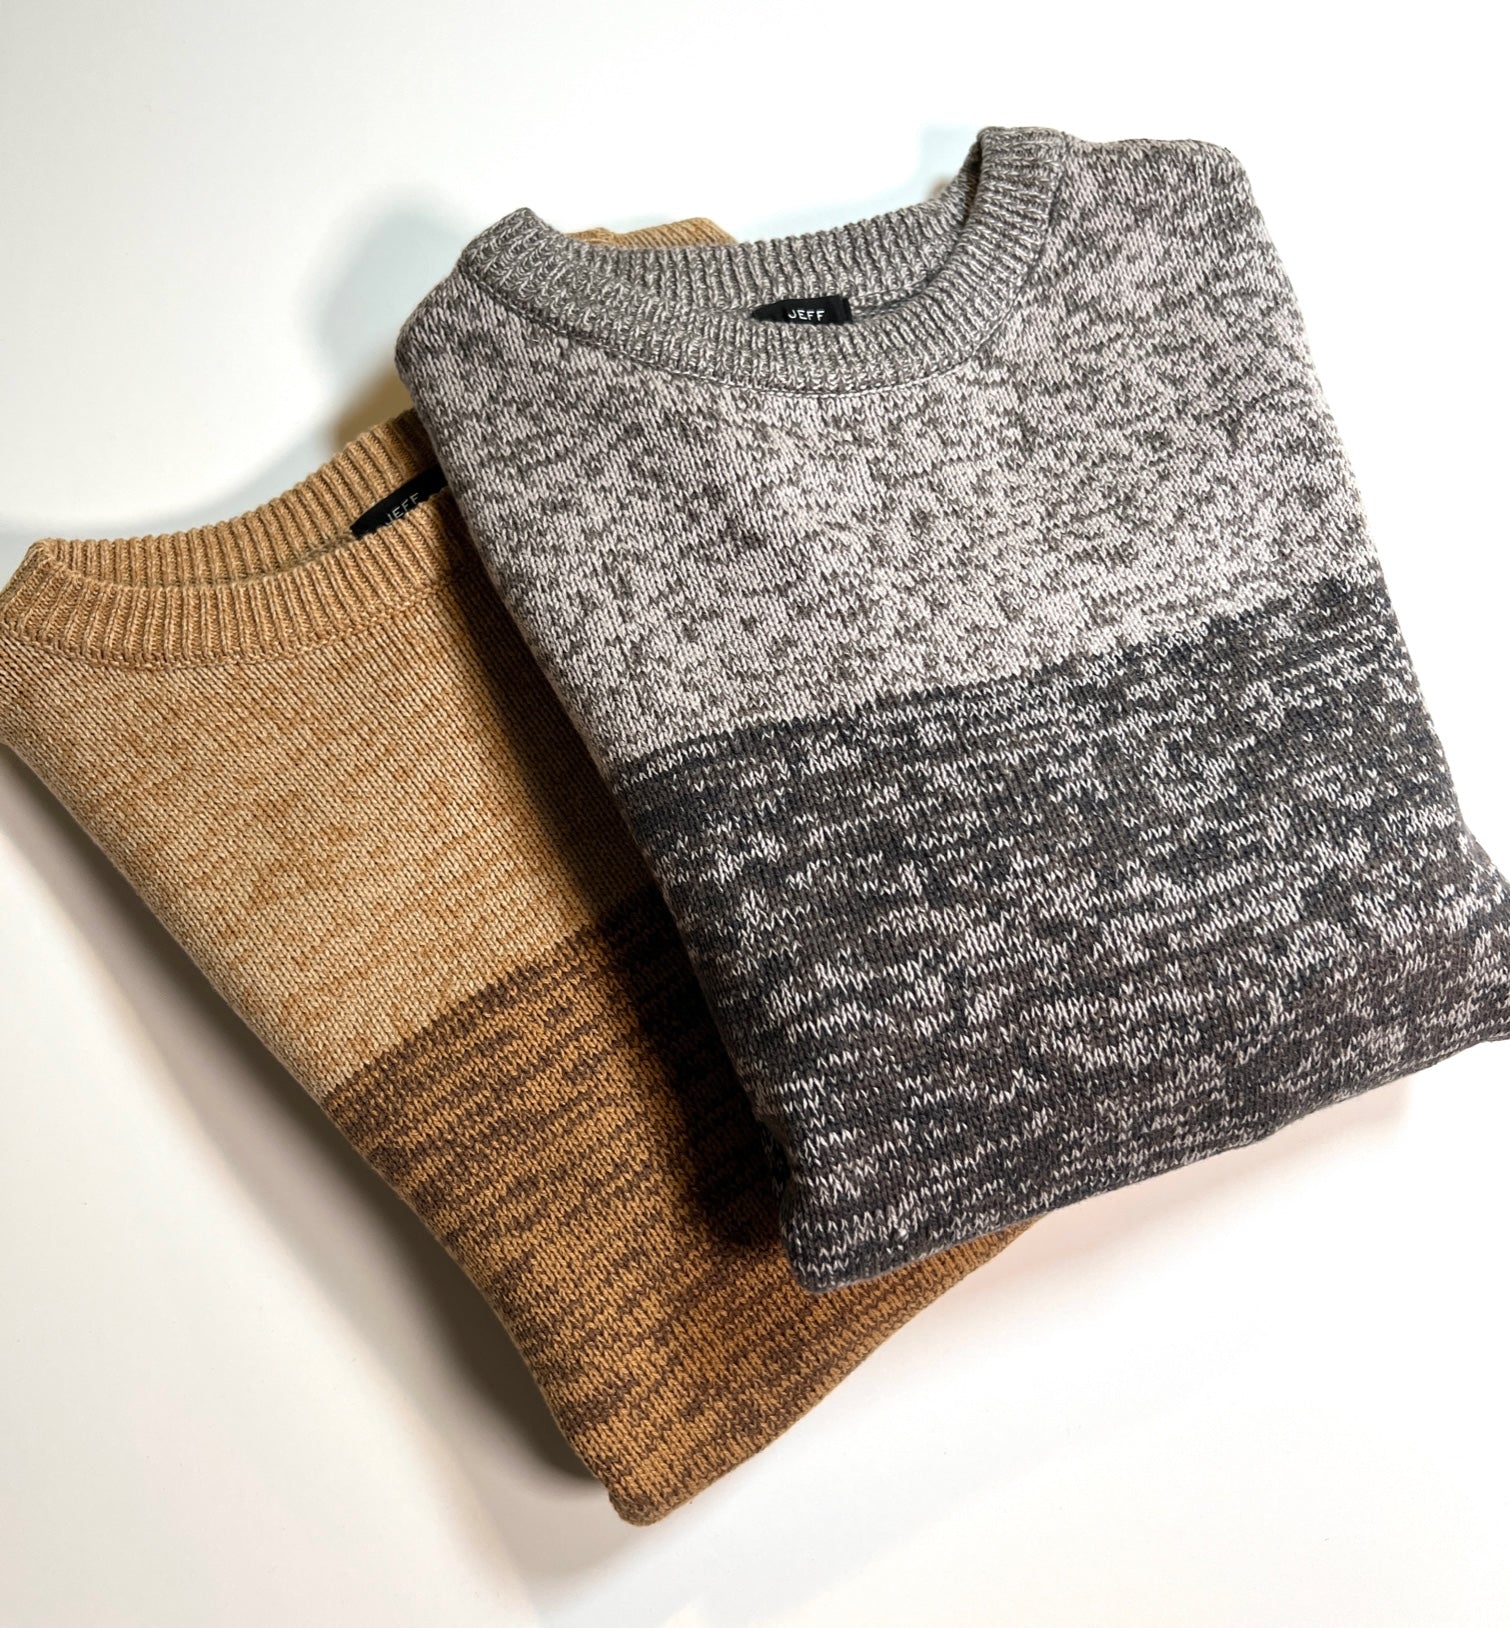 jeff sweaters – Jeff Clothing